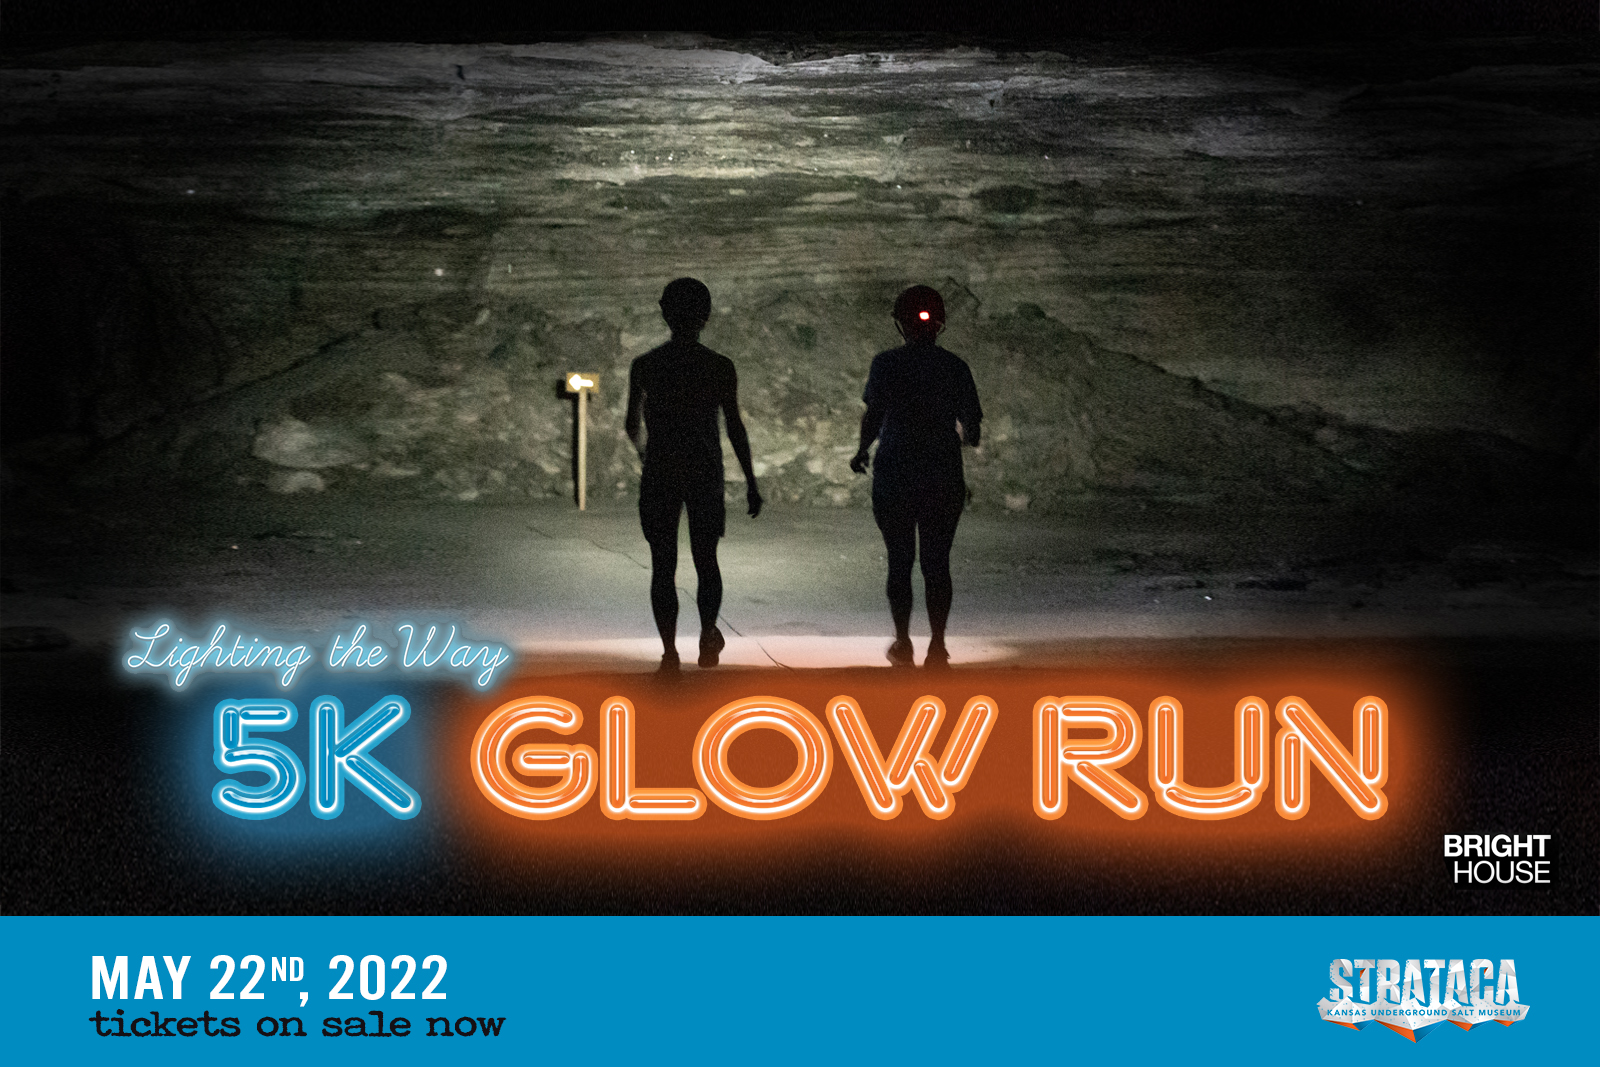 Event Promo Photo For Lighting the Way 5K Glow Run